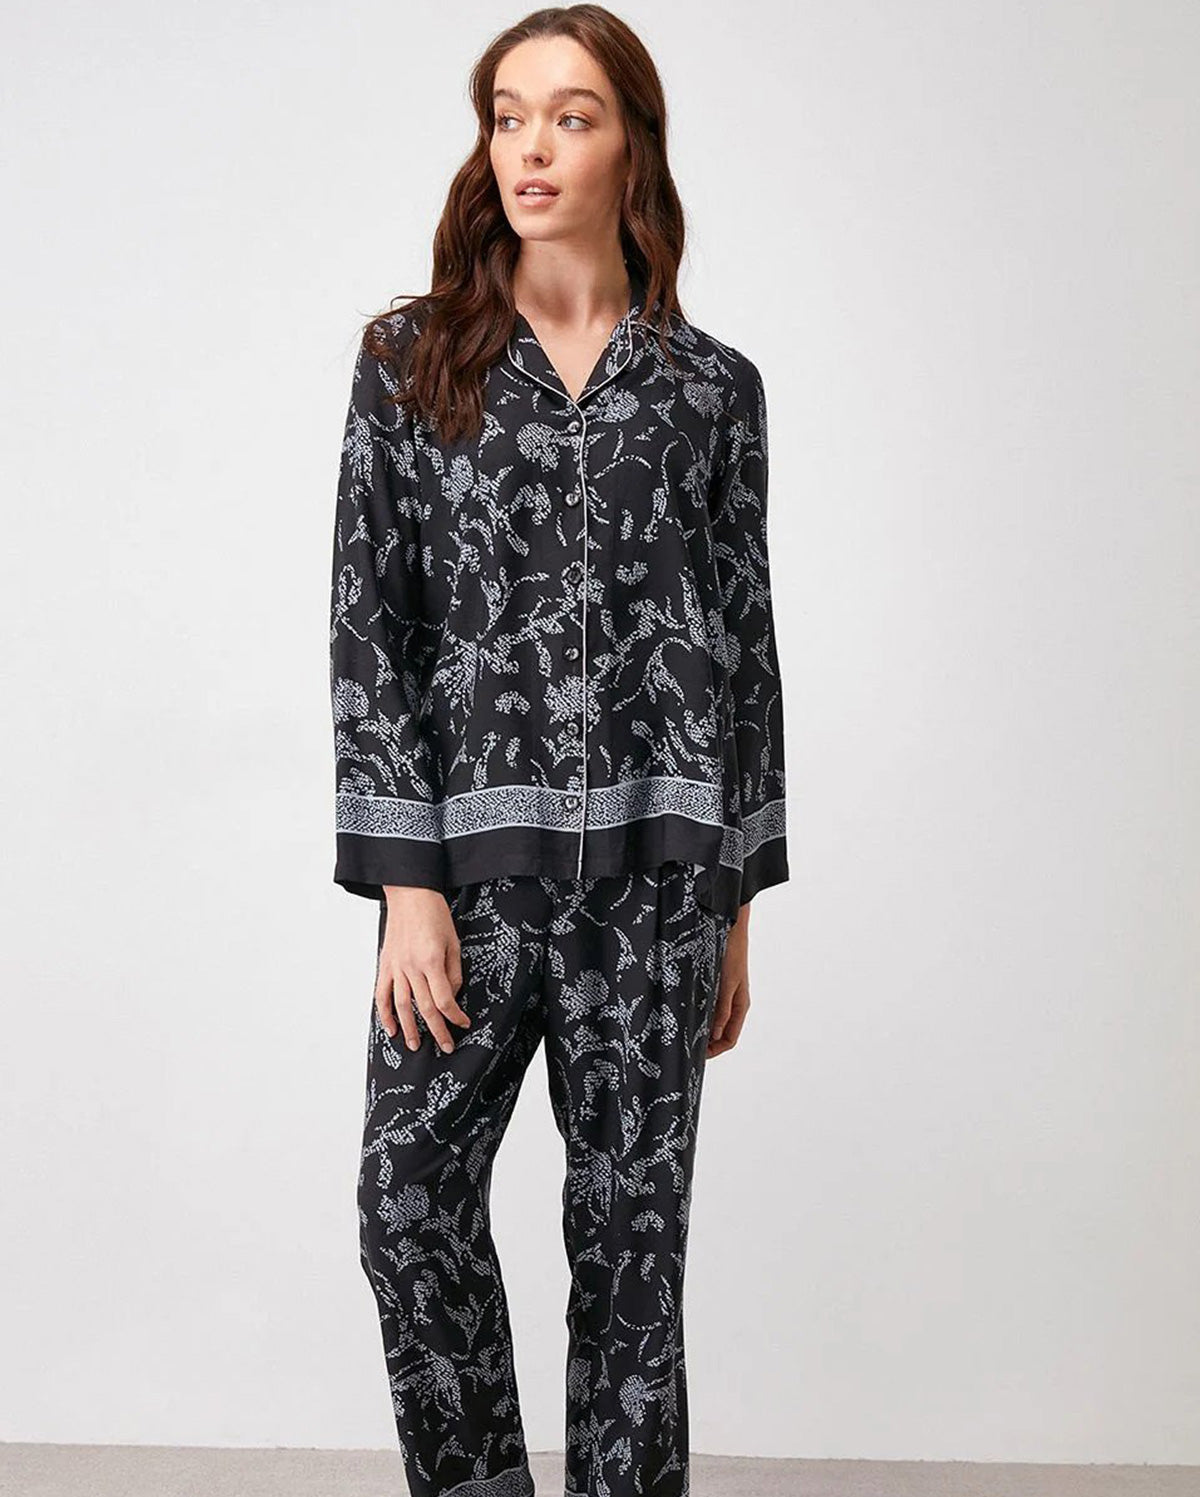 Patterned Pyjama Set - Black & White